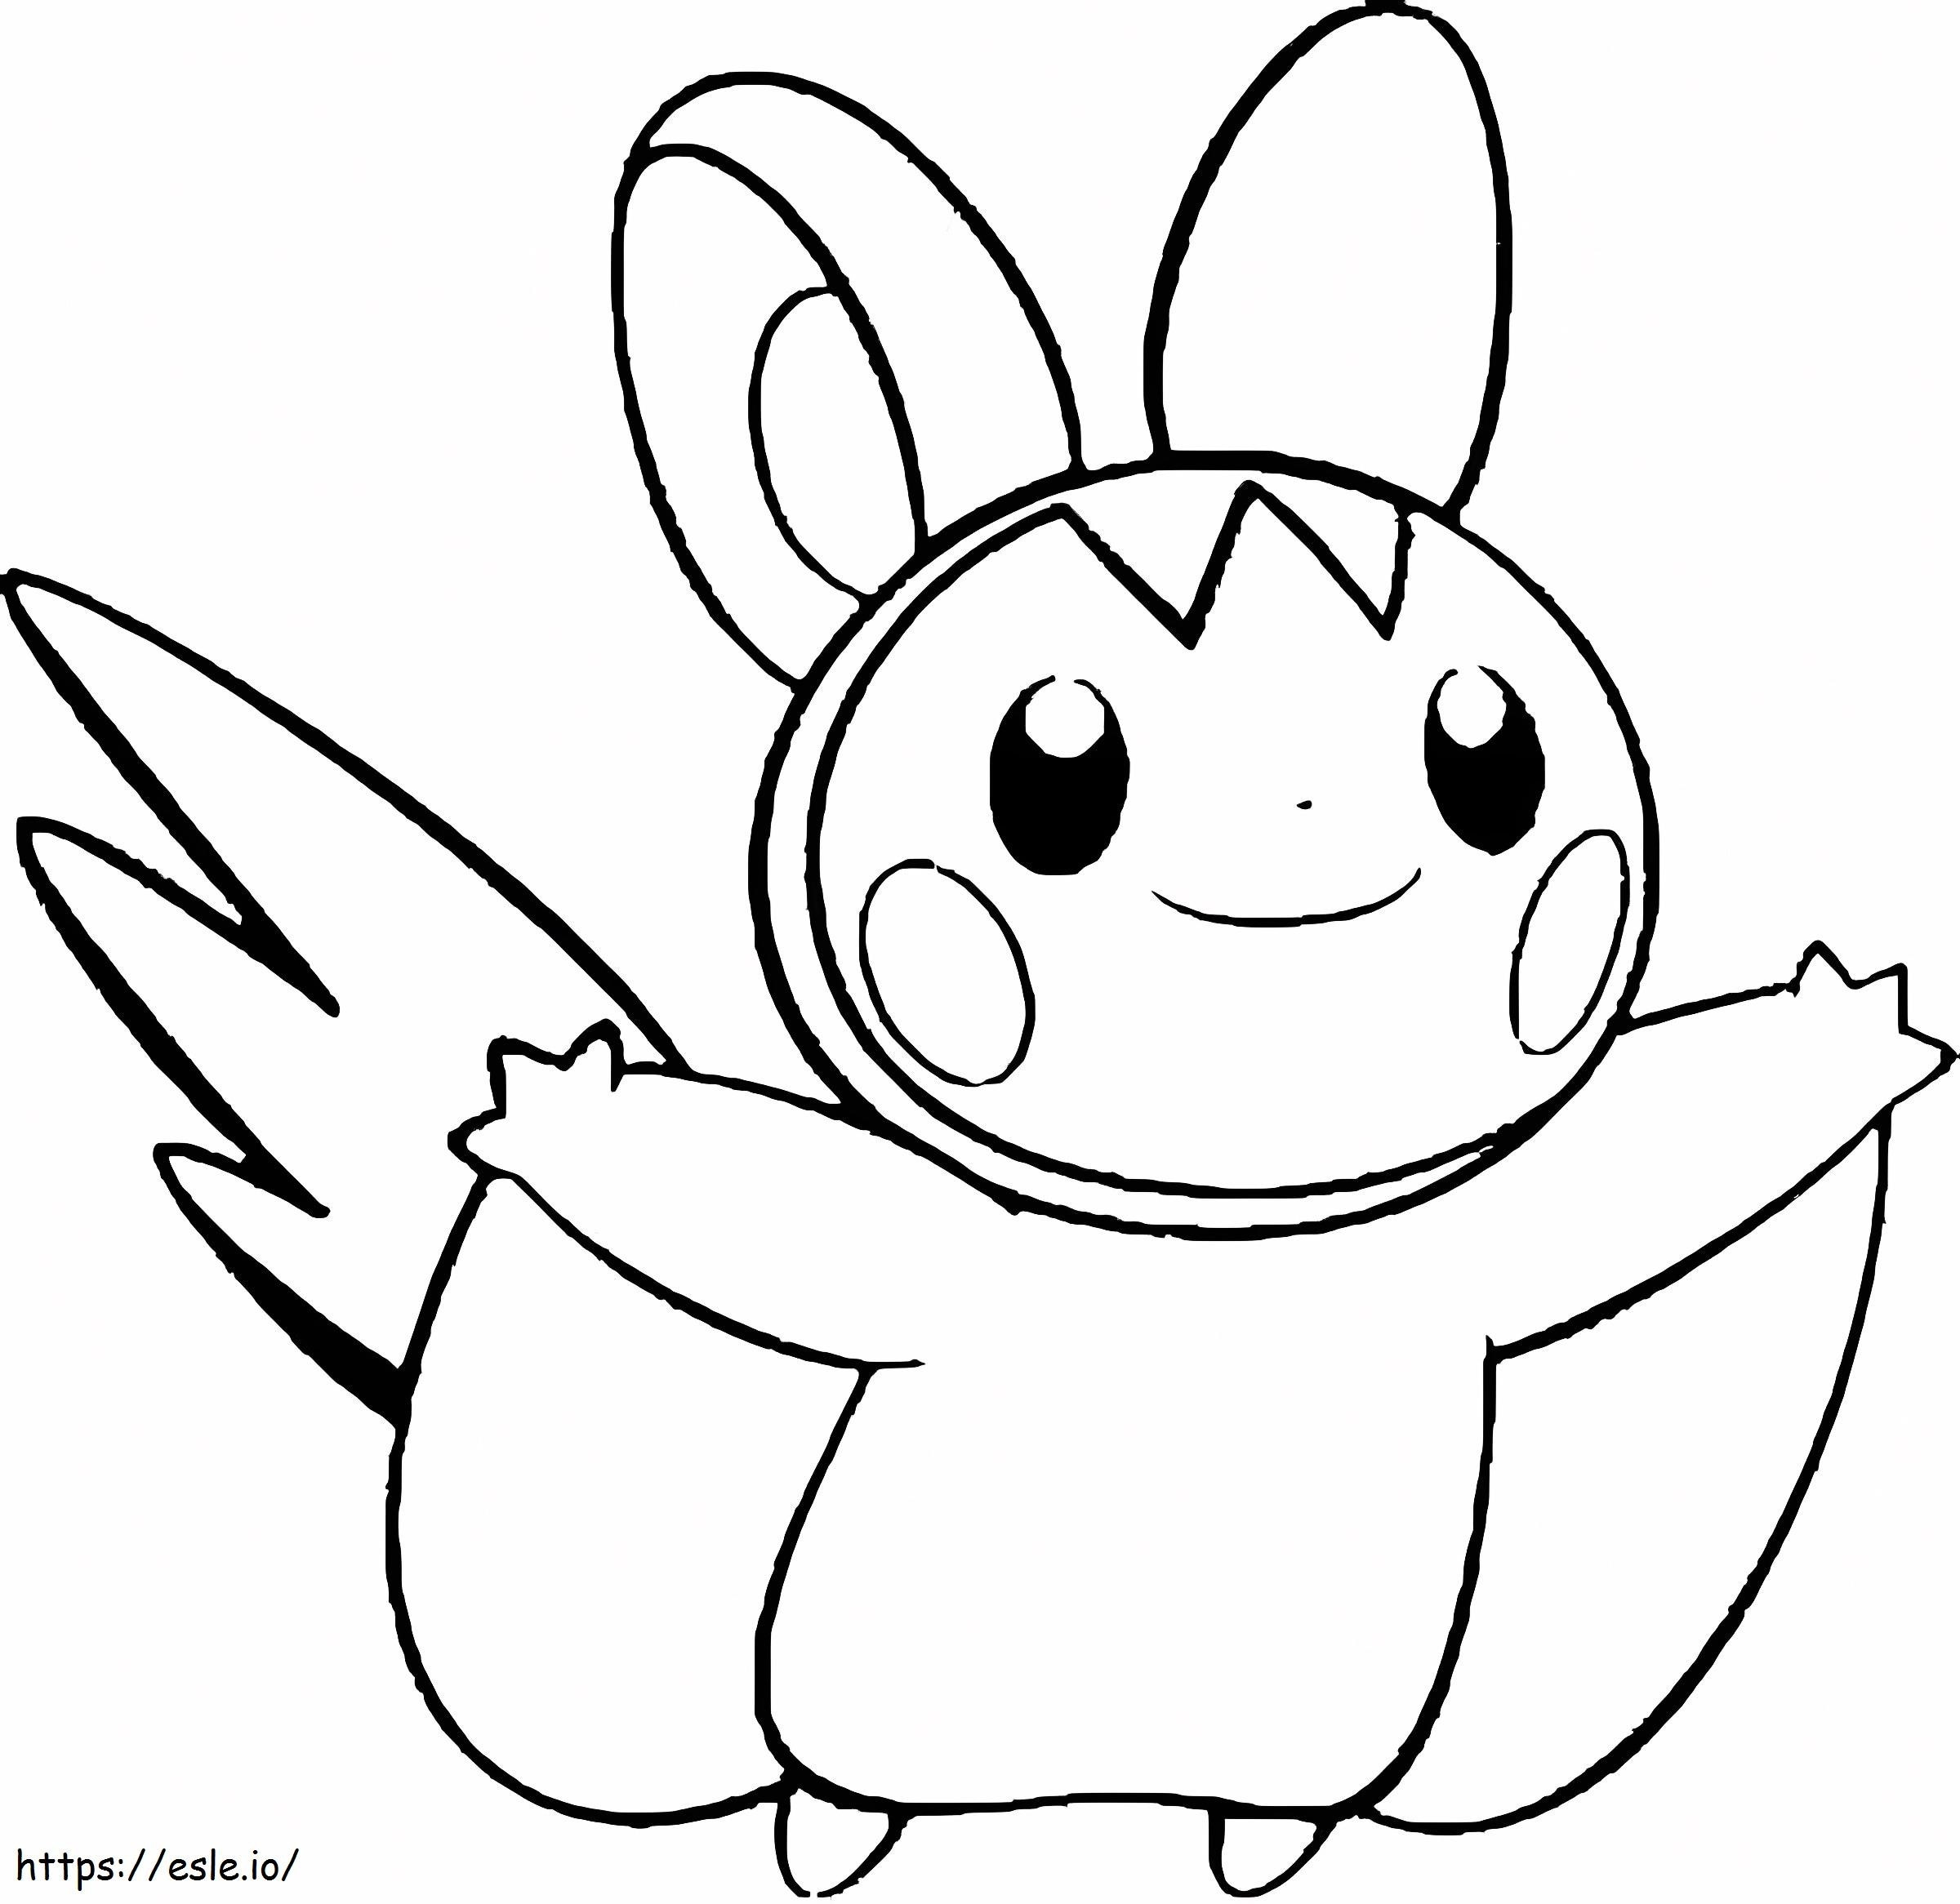 Coloriage Pokemon Emolga à imprimer dessin